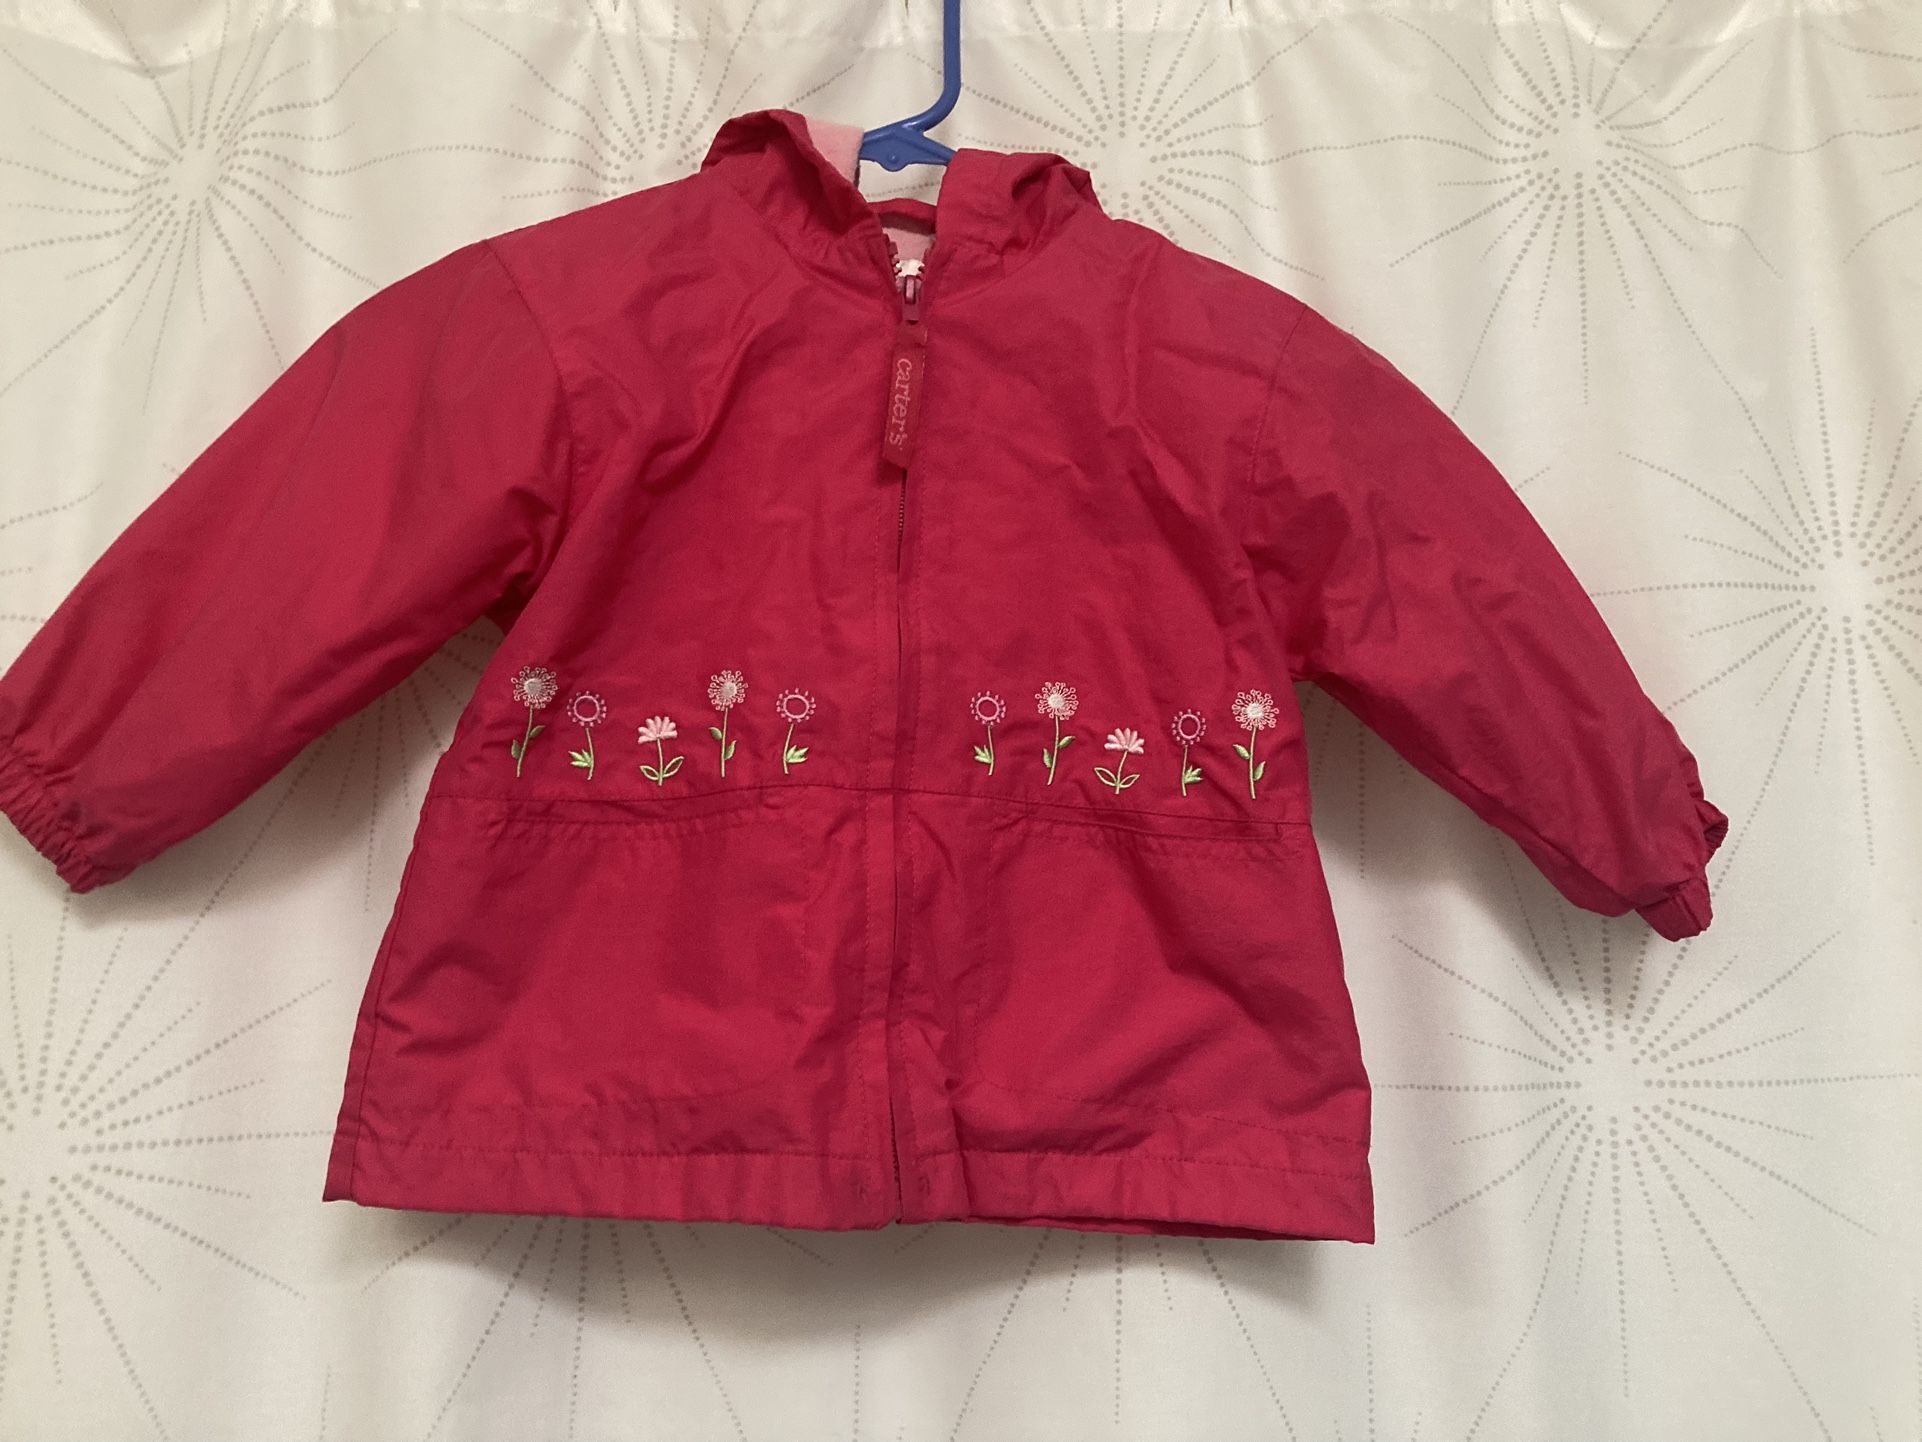 Girls Jacket With Hood, Carters Kids, 4T, Bright Pink, Water Resistant, Fleece Lining